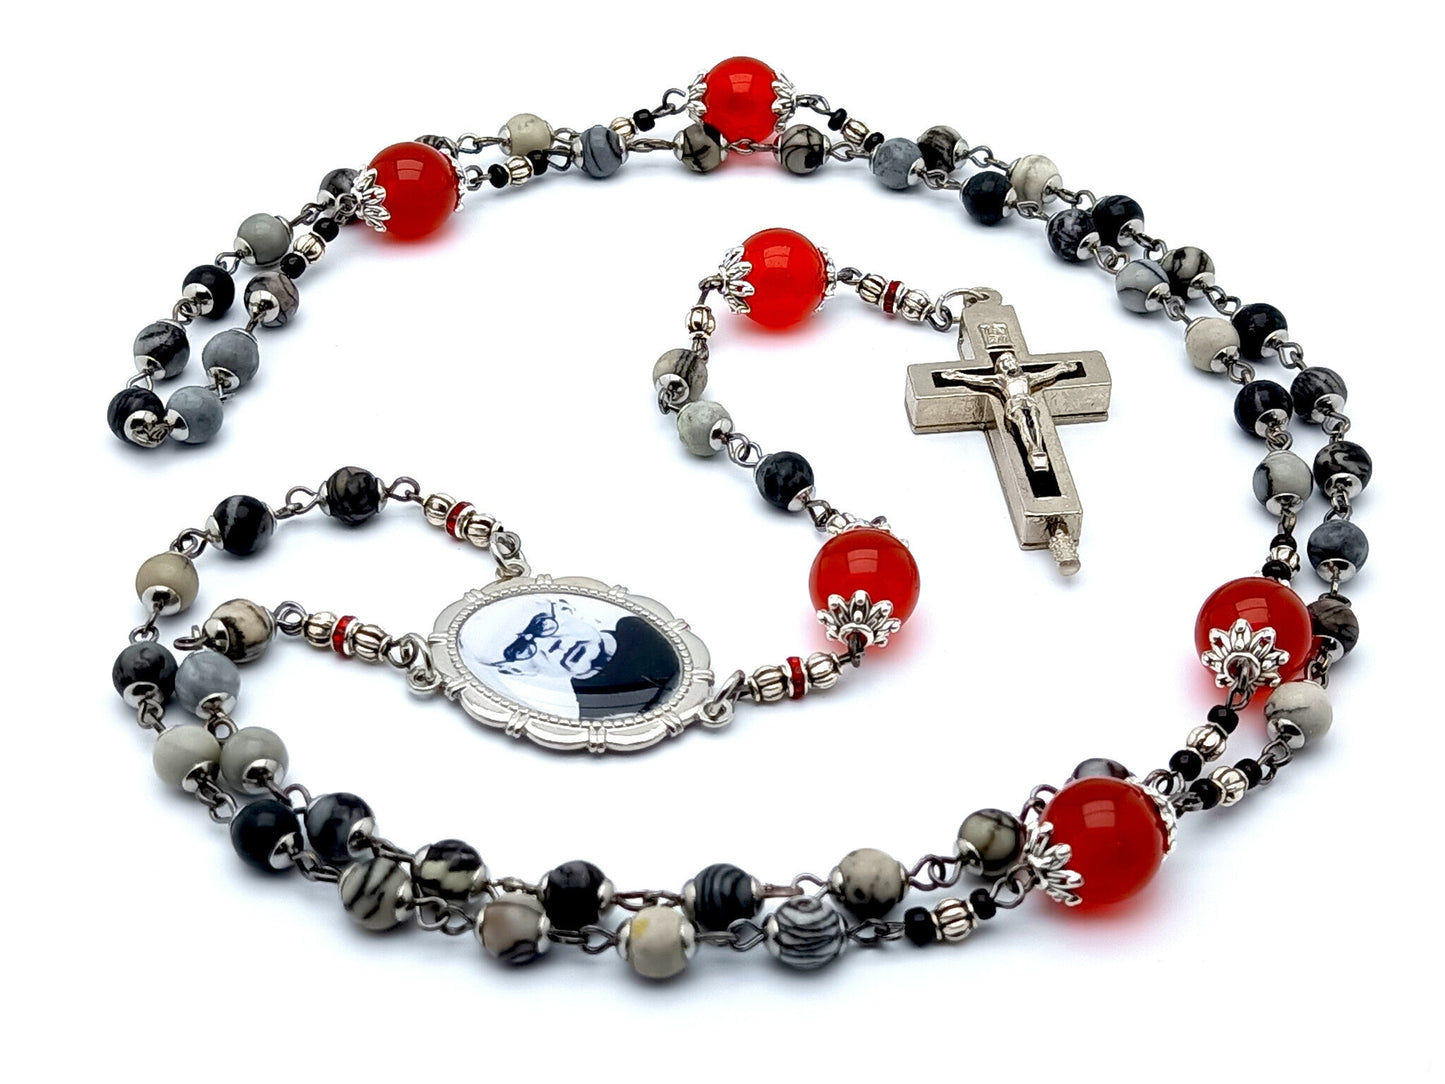 Saint Maximilian Kolbe unique rosary beads jasper and ruby gemstone rosary beads with memory reliquary holder crucifix.